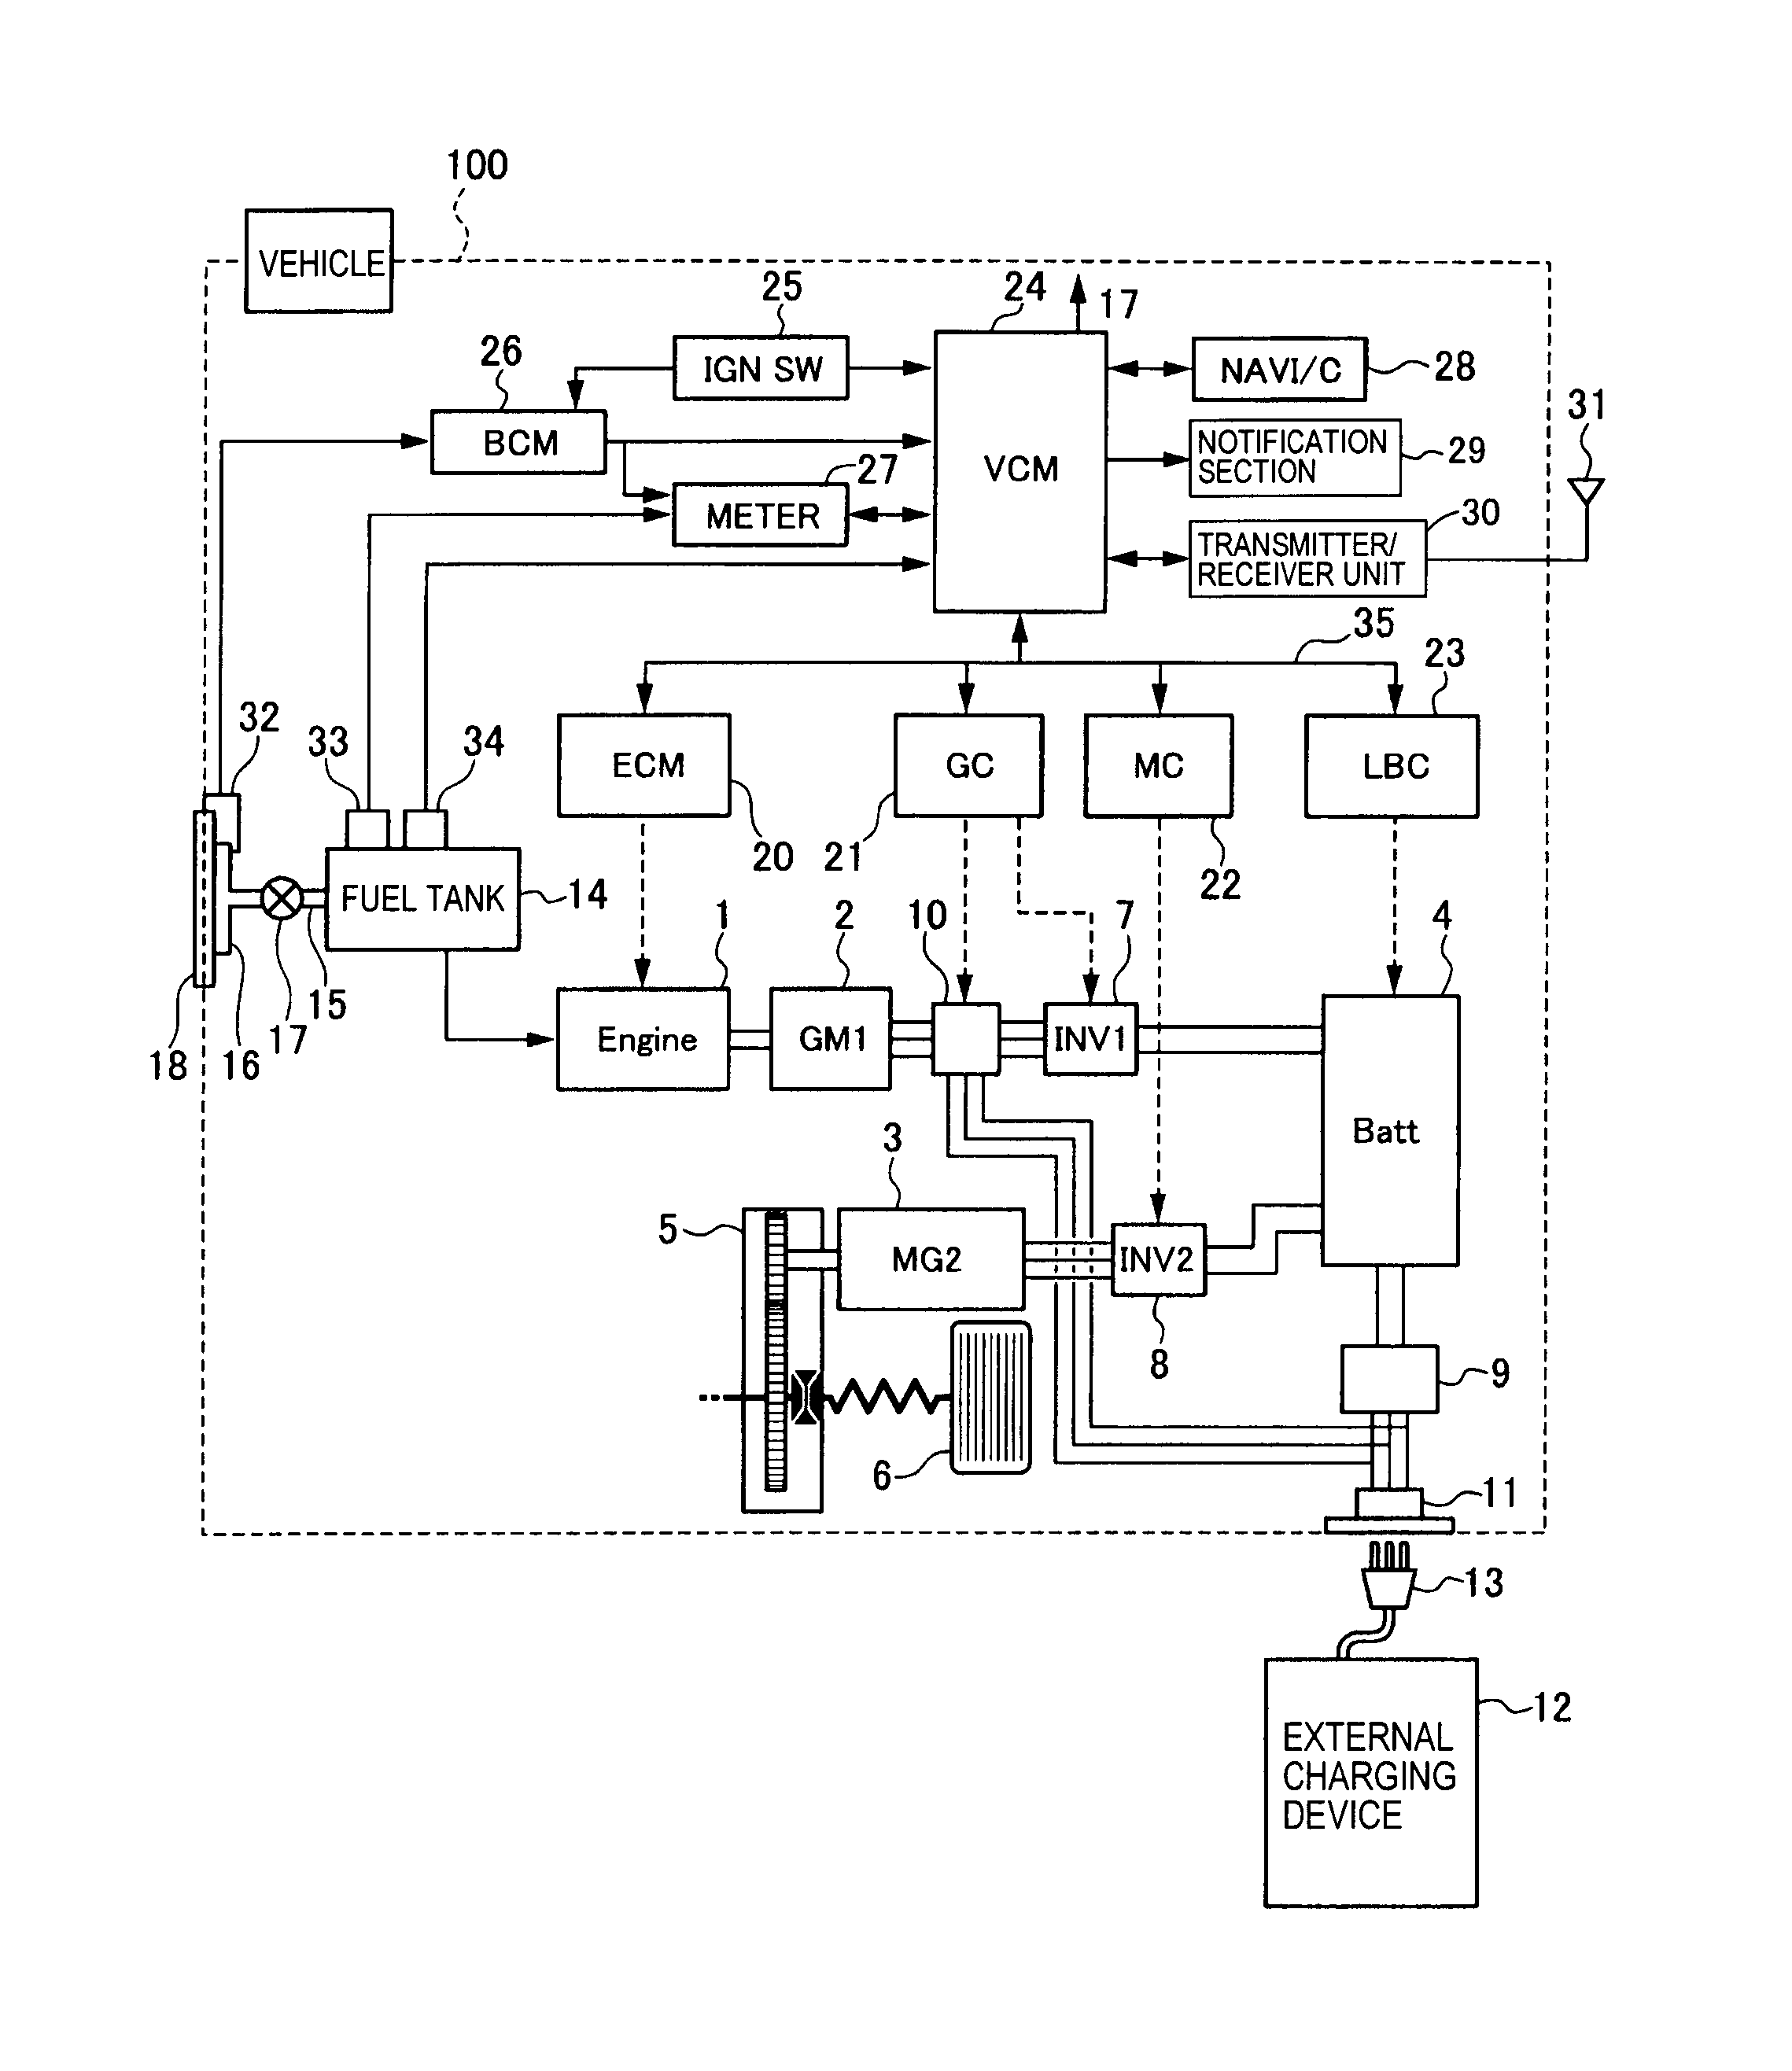 ford 9n 12 volt conversion wiring diagram